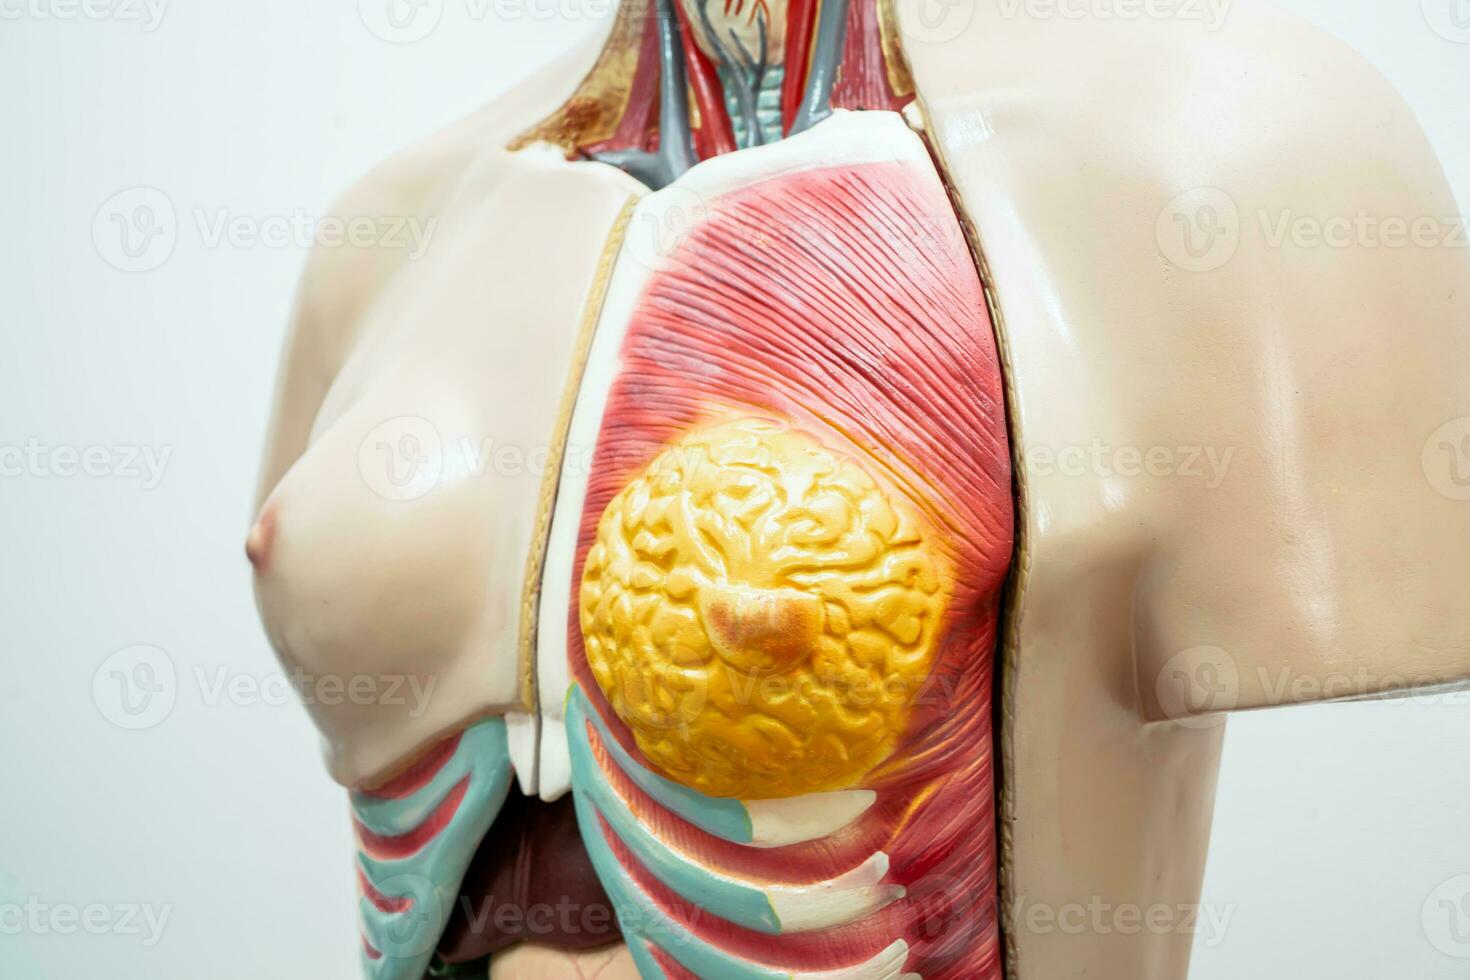 Mensch Brust Modell- Anatomie zum medizinisch Ausbildung Kurs, Lehren Medizin Bildung. foto